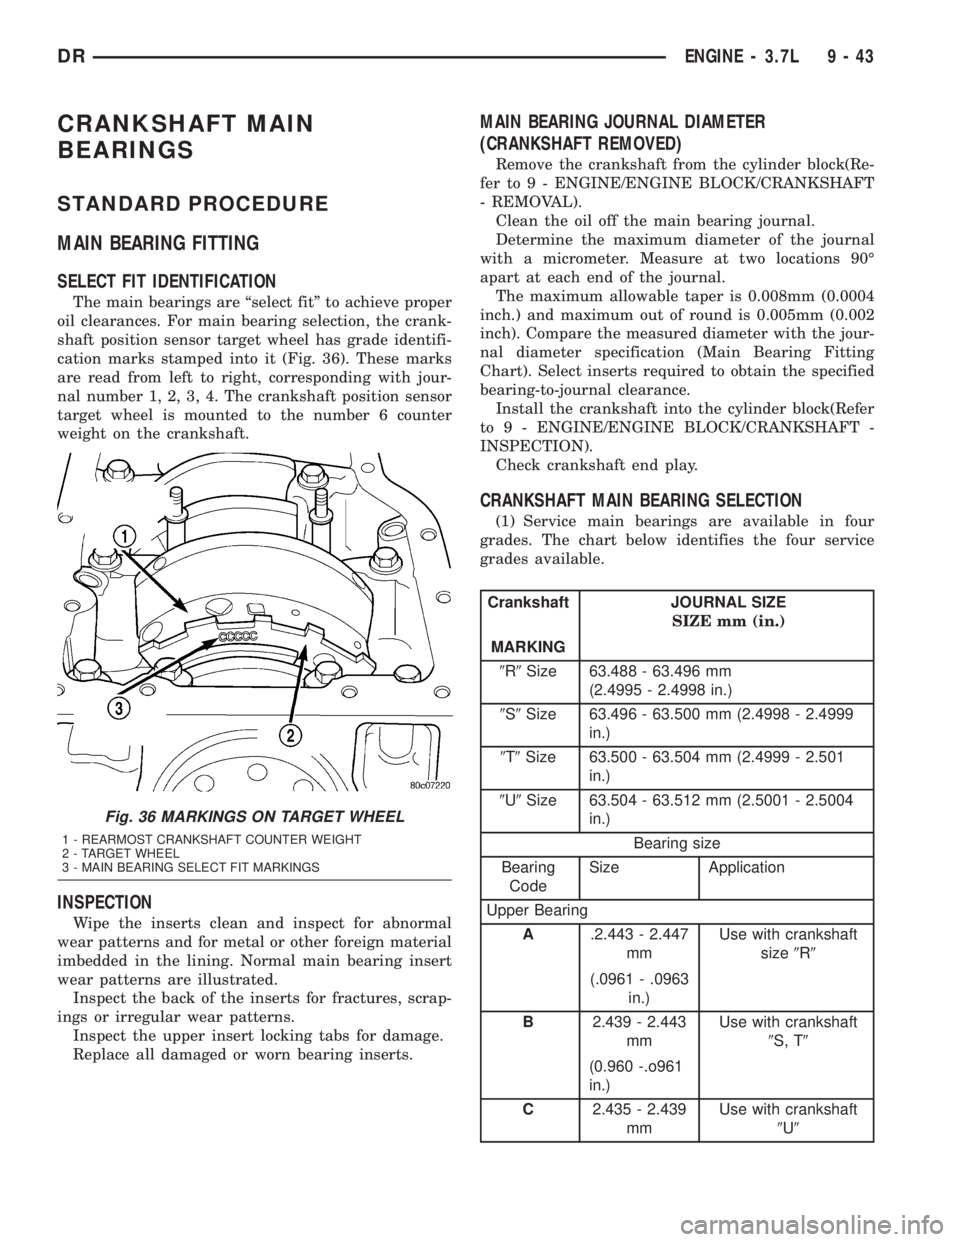 DODGE RAM 2003  Service Repair Manual CRANKSHAFT MAIN
BEARINGS
STANDARD PROCEDURE
MAIN BEARING FITTING
SELECT FIT IDENTIFICATION
The main bearings are ªselect fitº to achieve proper
oil clearances. For main bearing selection, the crank-